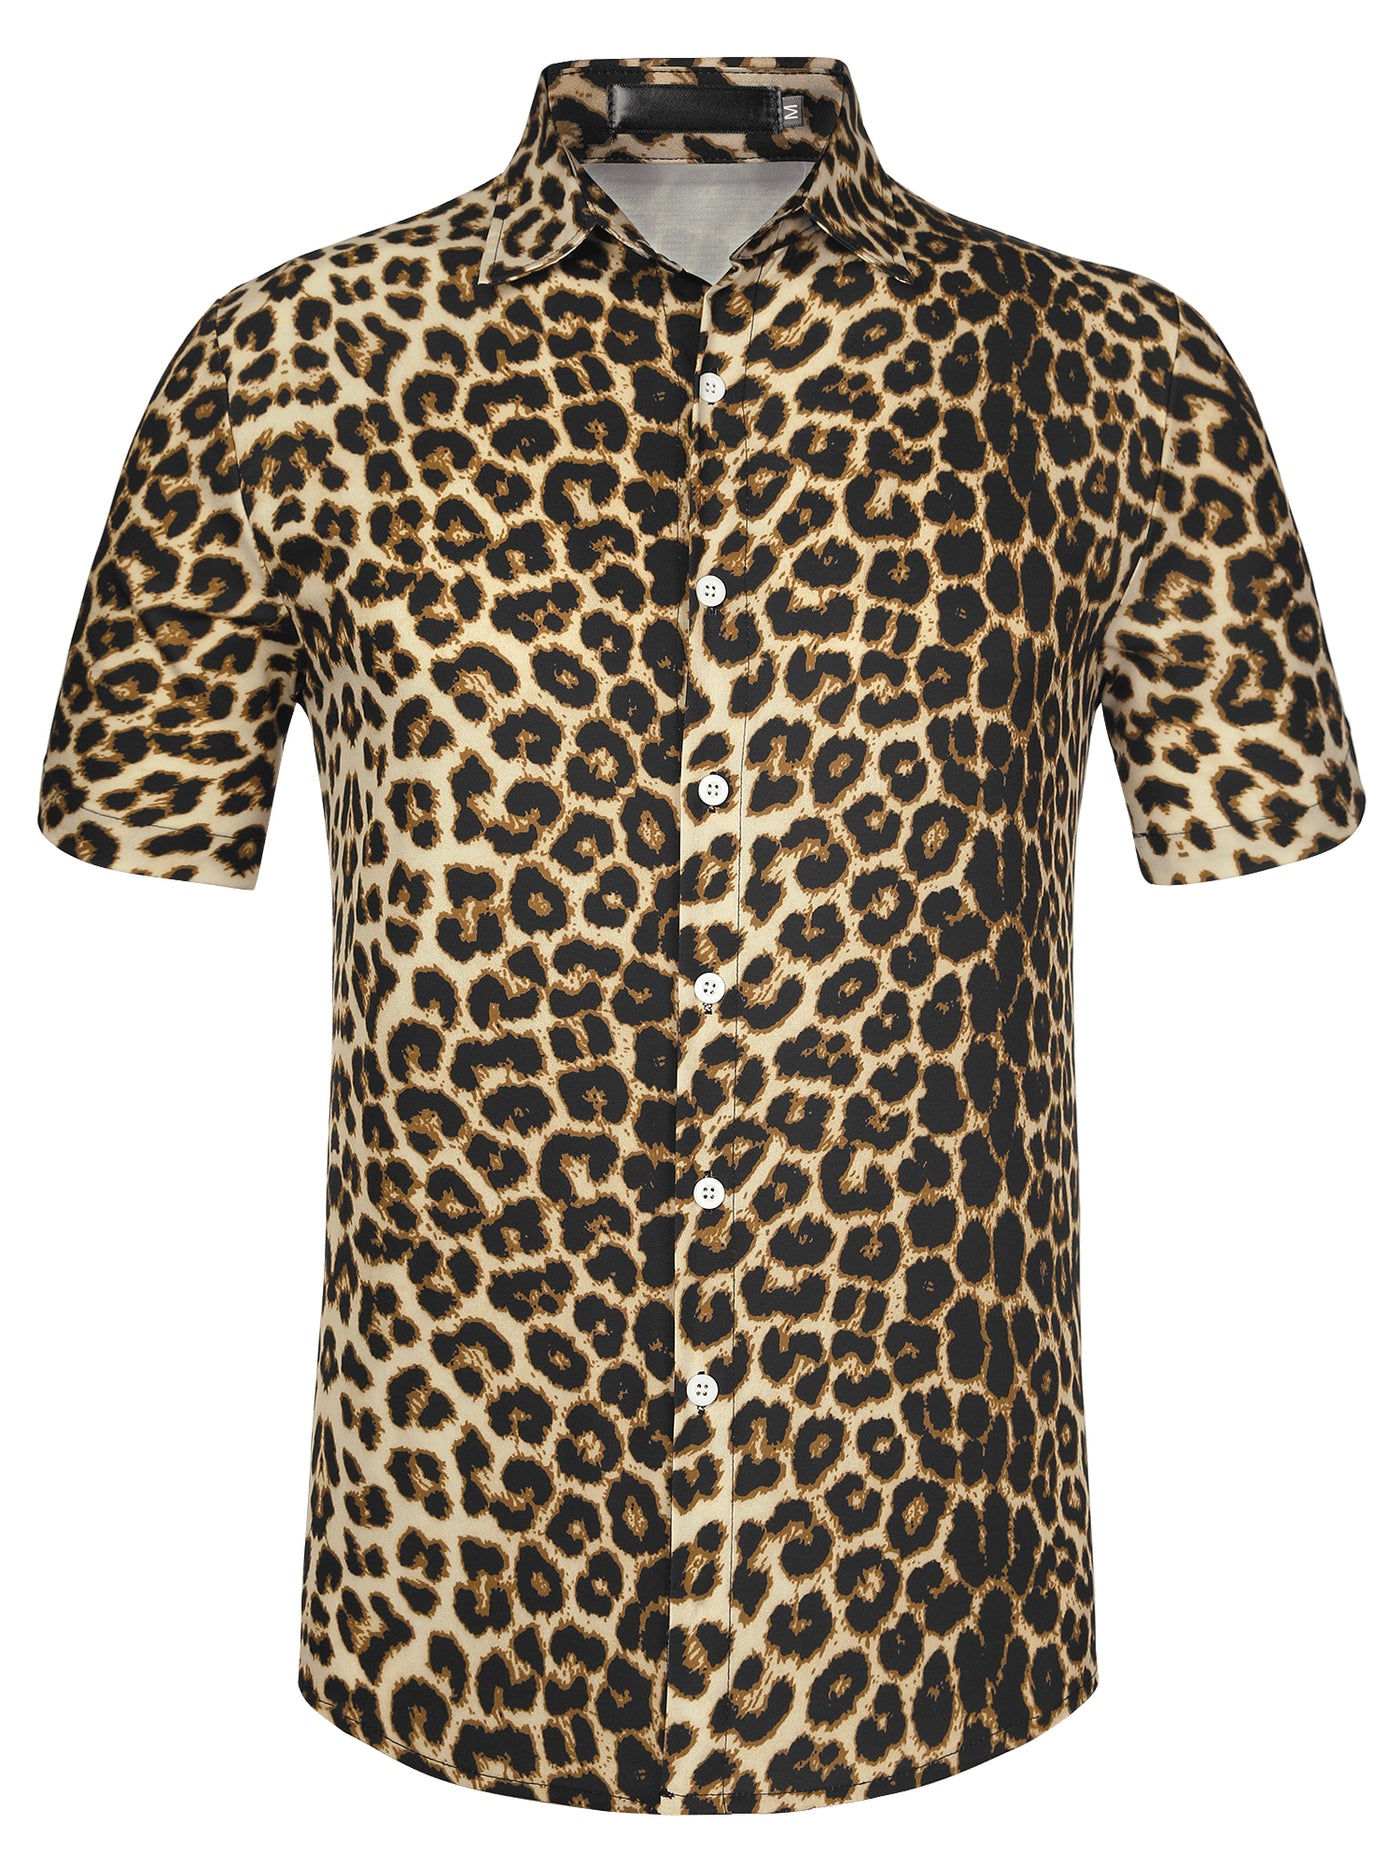 Bublédon Casual Summer Leopard Printed Short Sleeve Shirts